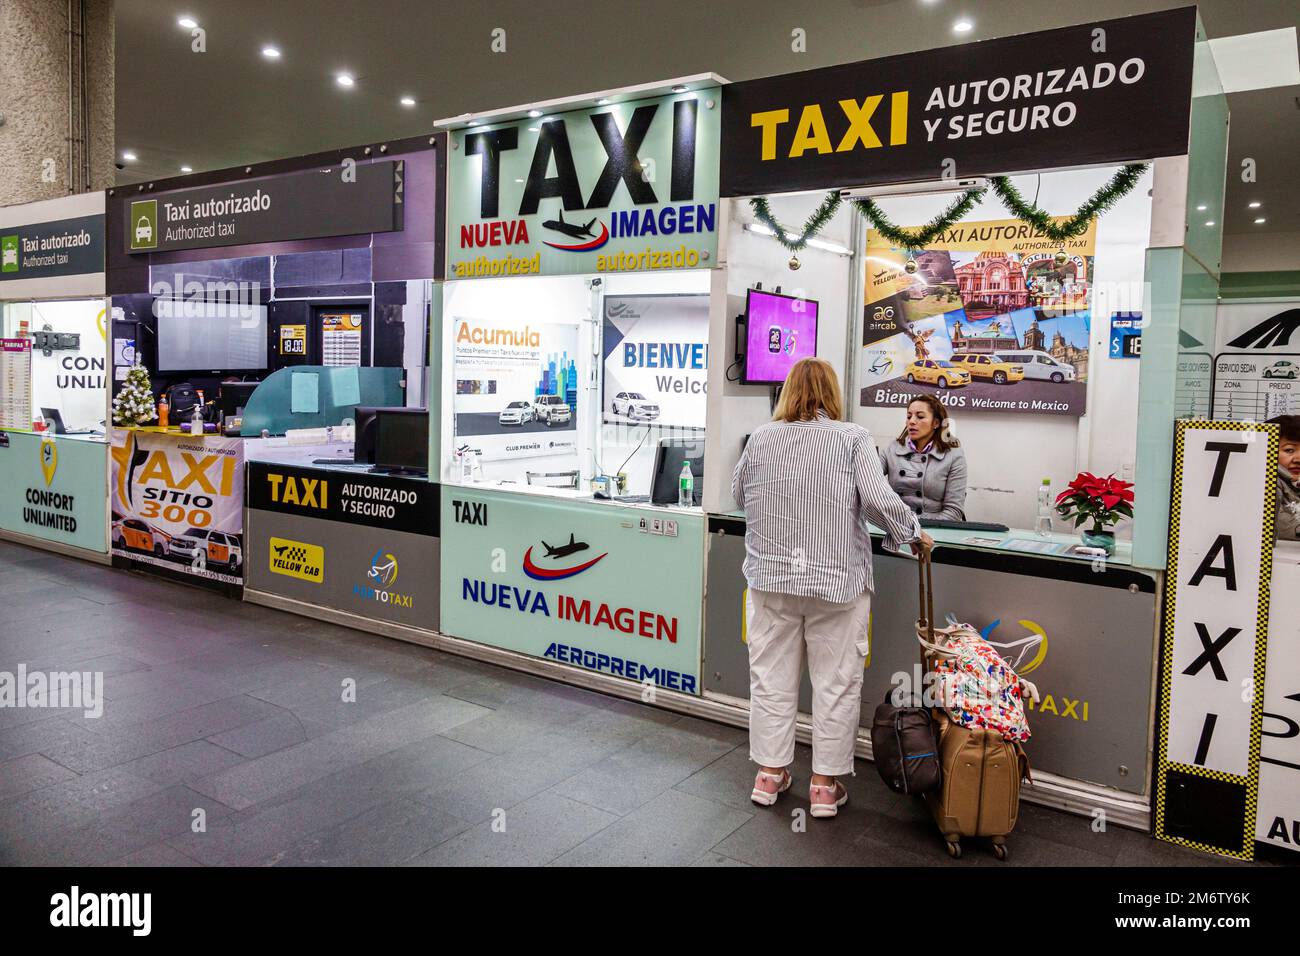 Mexico City,Aeropuerto Internacional Benito Juarez International Airport,terminal concourse gate area,taxi service ordering taxicab,woman women lady f Stock Photo